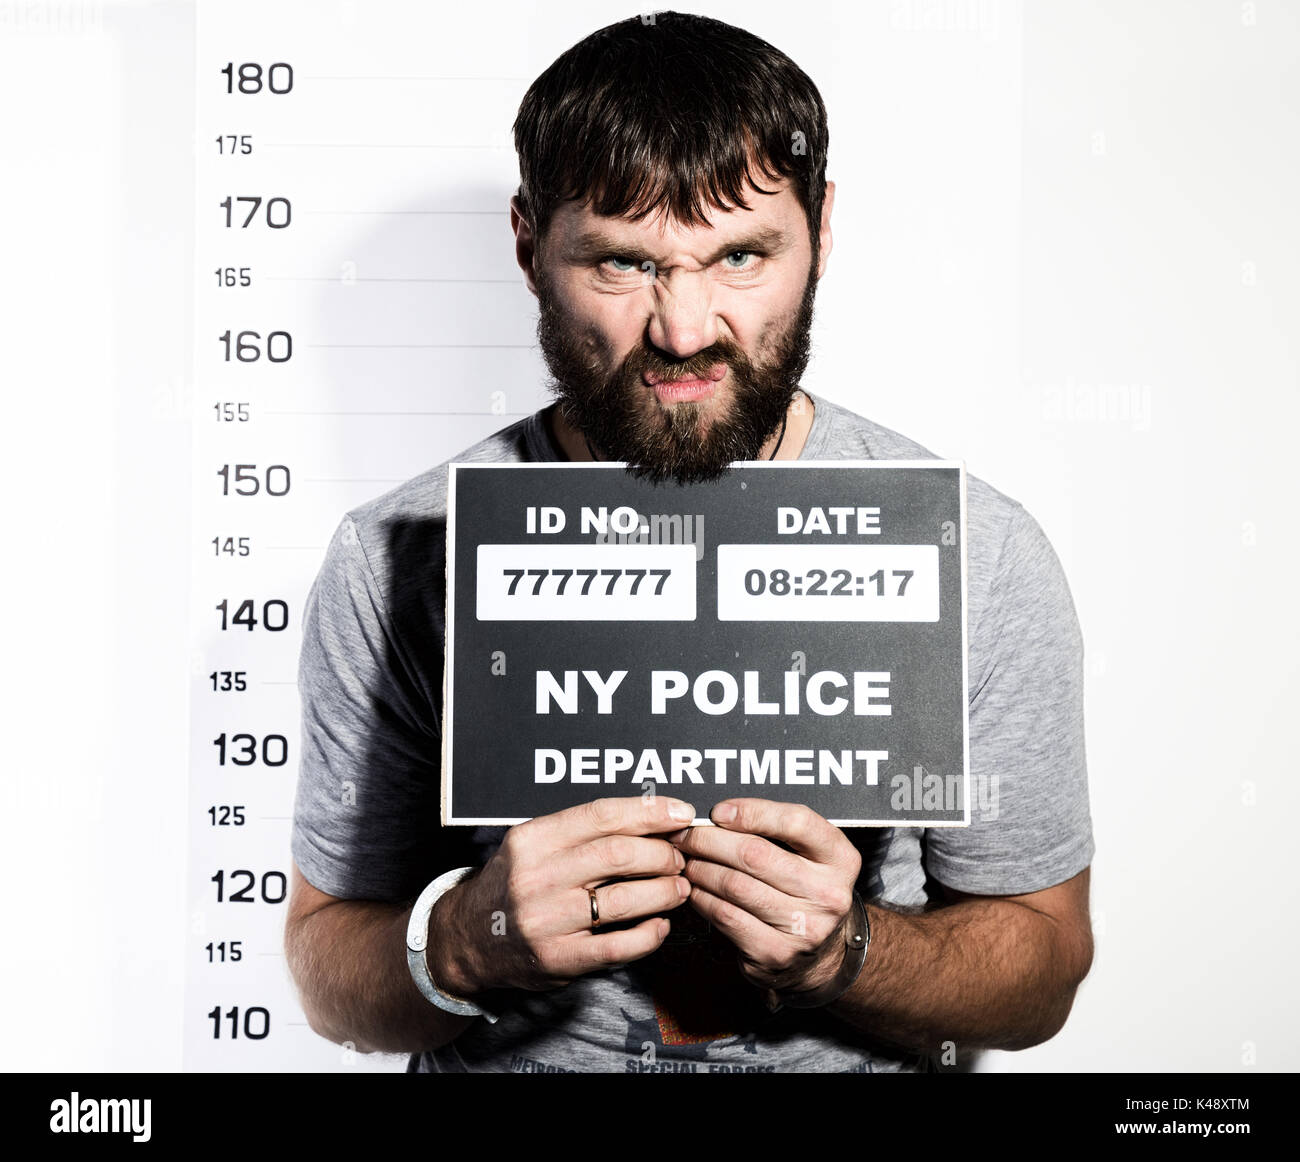 IMAGE(https://c8.alamy.com/comp/K48XTM/bearded-man-in-handcuffs-holds-a-sign-criminal-mug-shots-K48XTM.jpg)